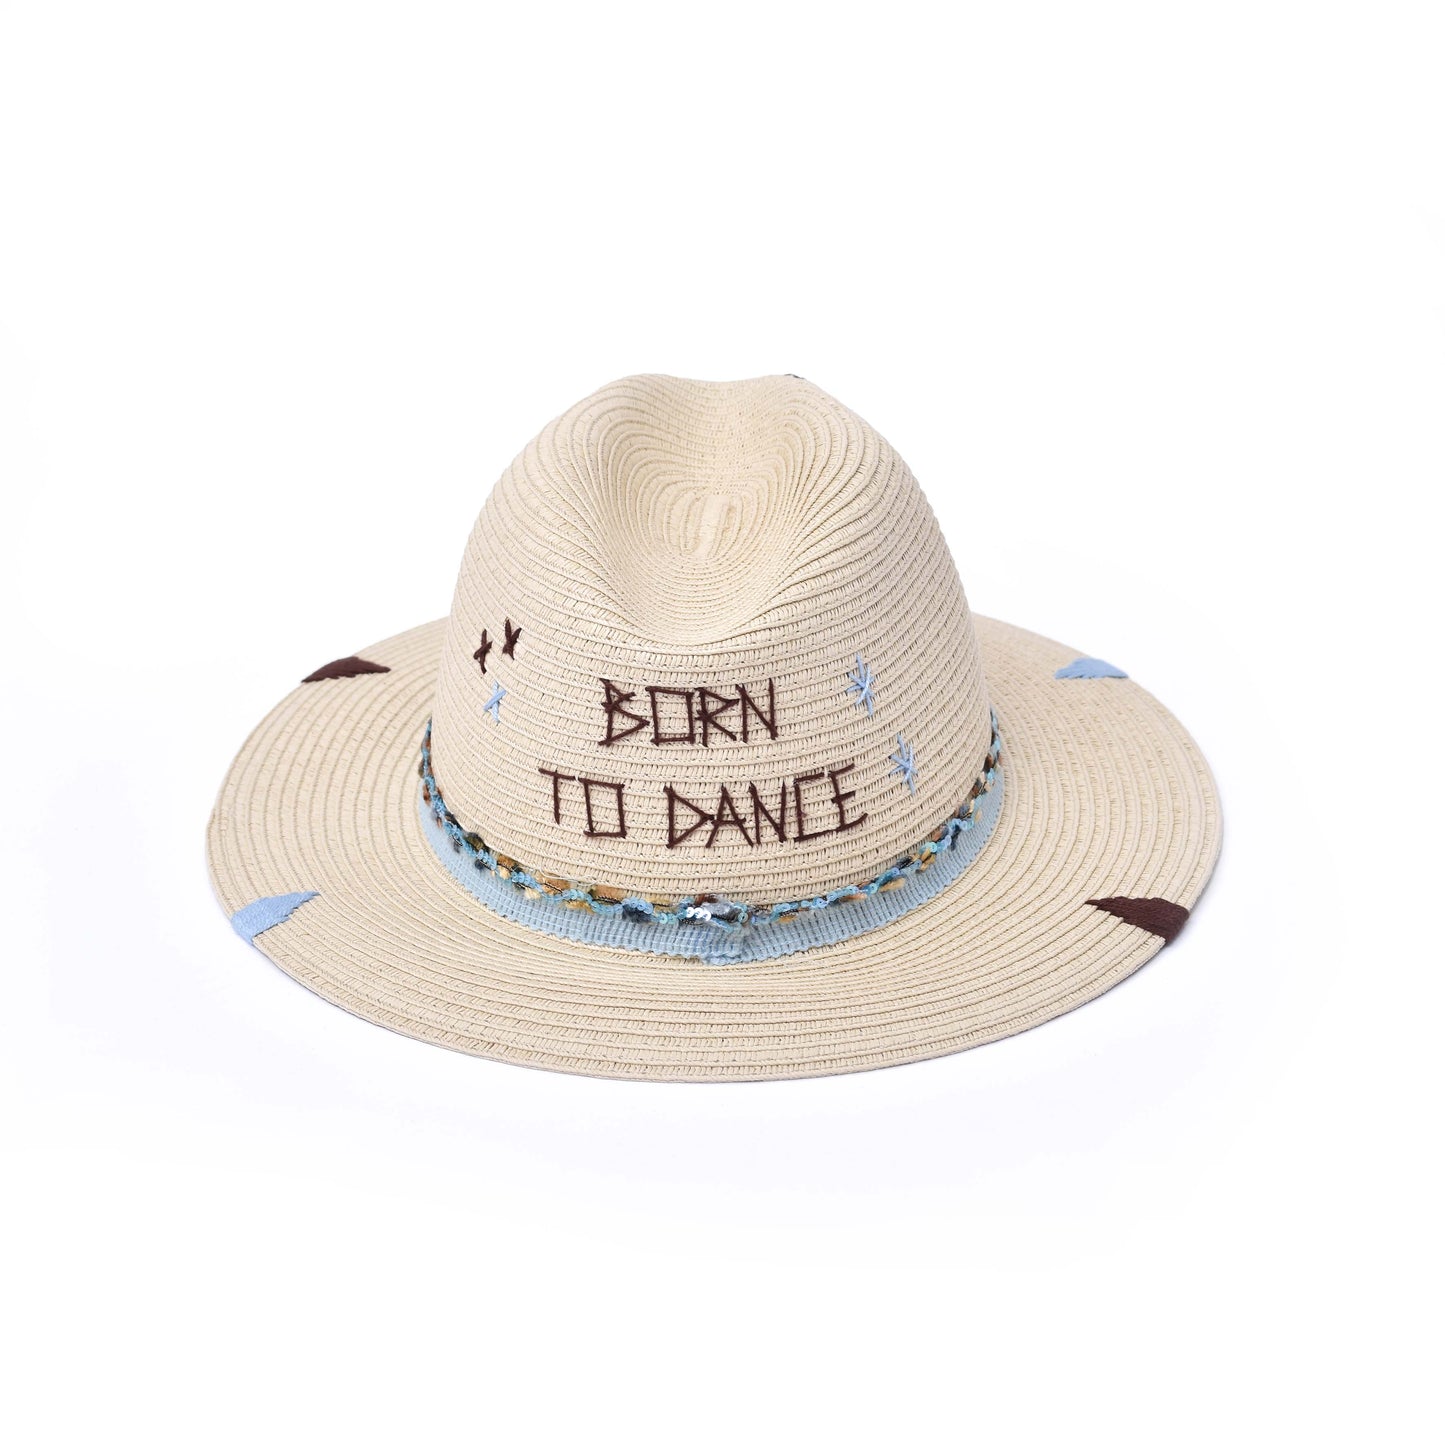 BORN TO DANCE - BEIGE